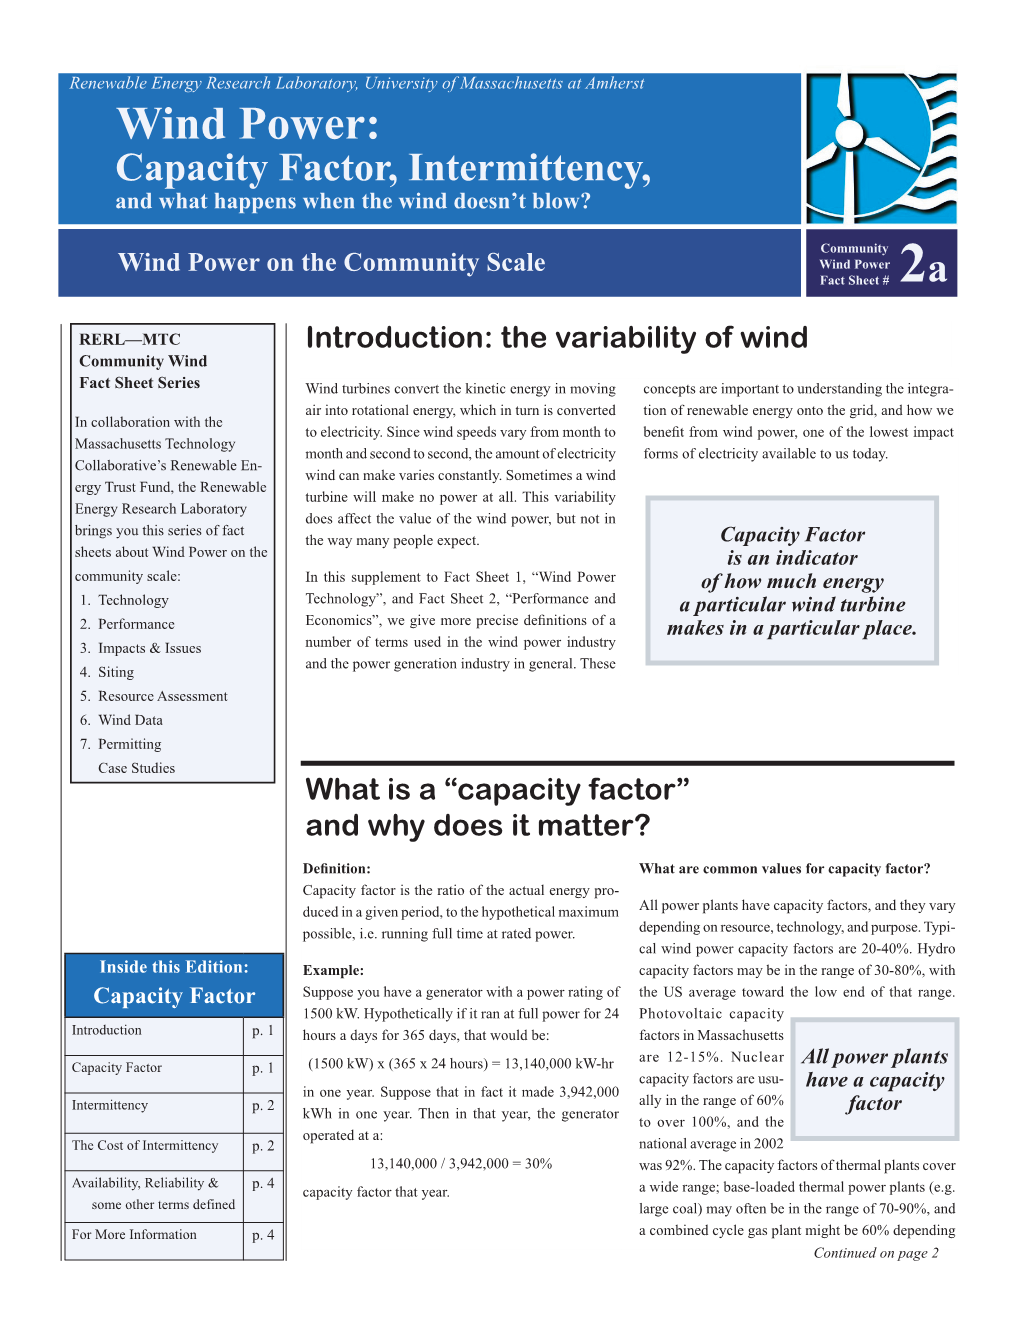 Wind Power: Capacity Factor & Intermittency